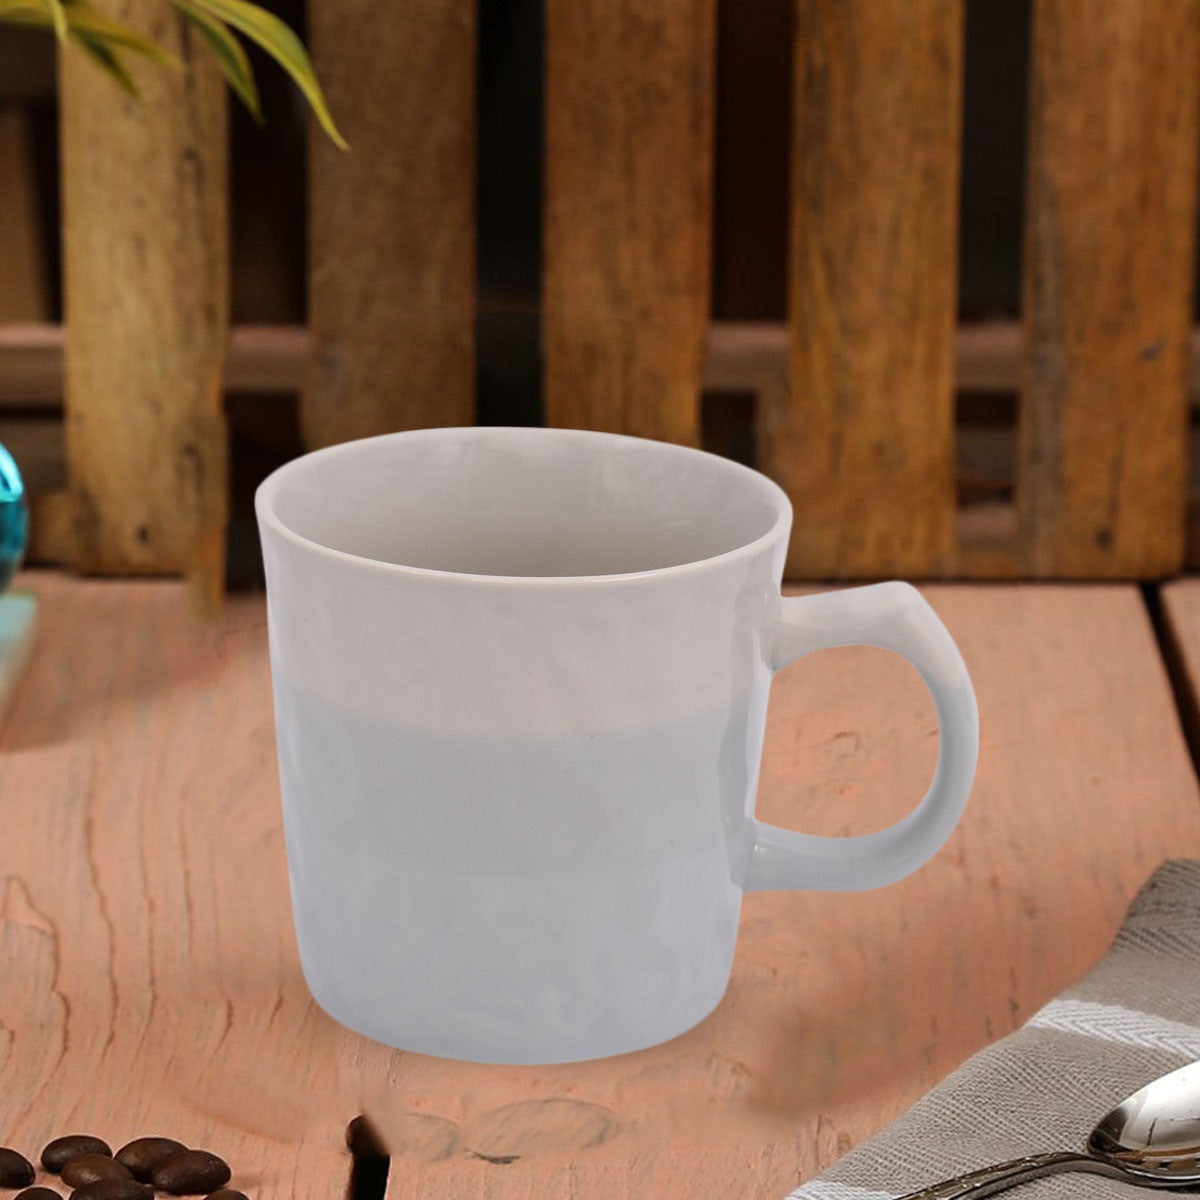 Kookee Ceramic Coffee or Tea Mug with Handle for Office, Home or Gifting - 250ml (1394-1-B)